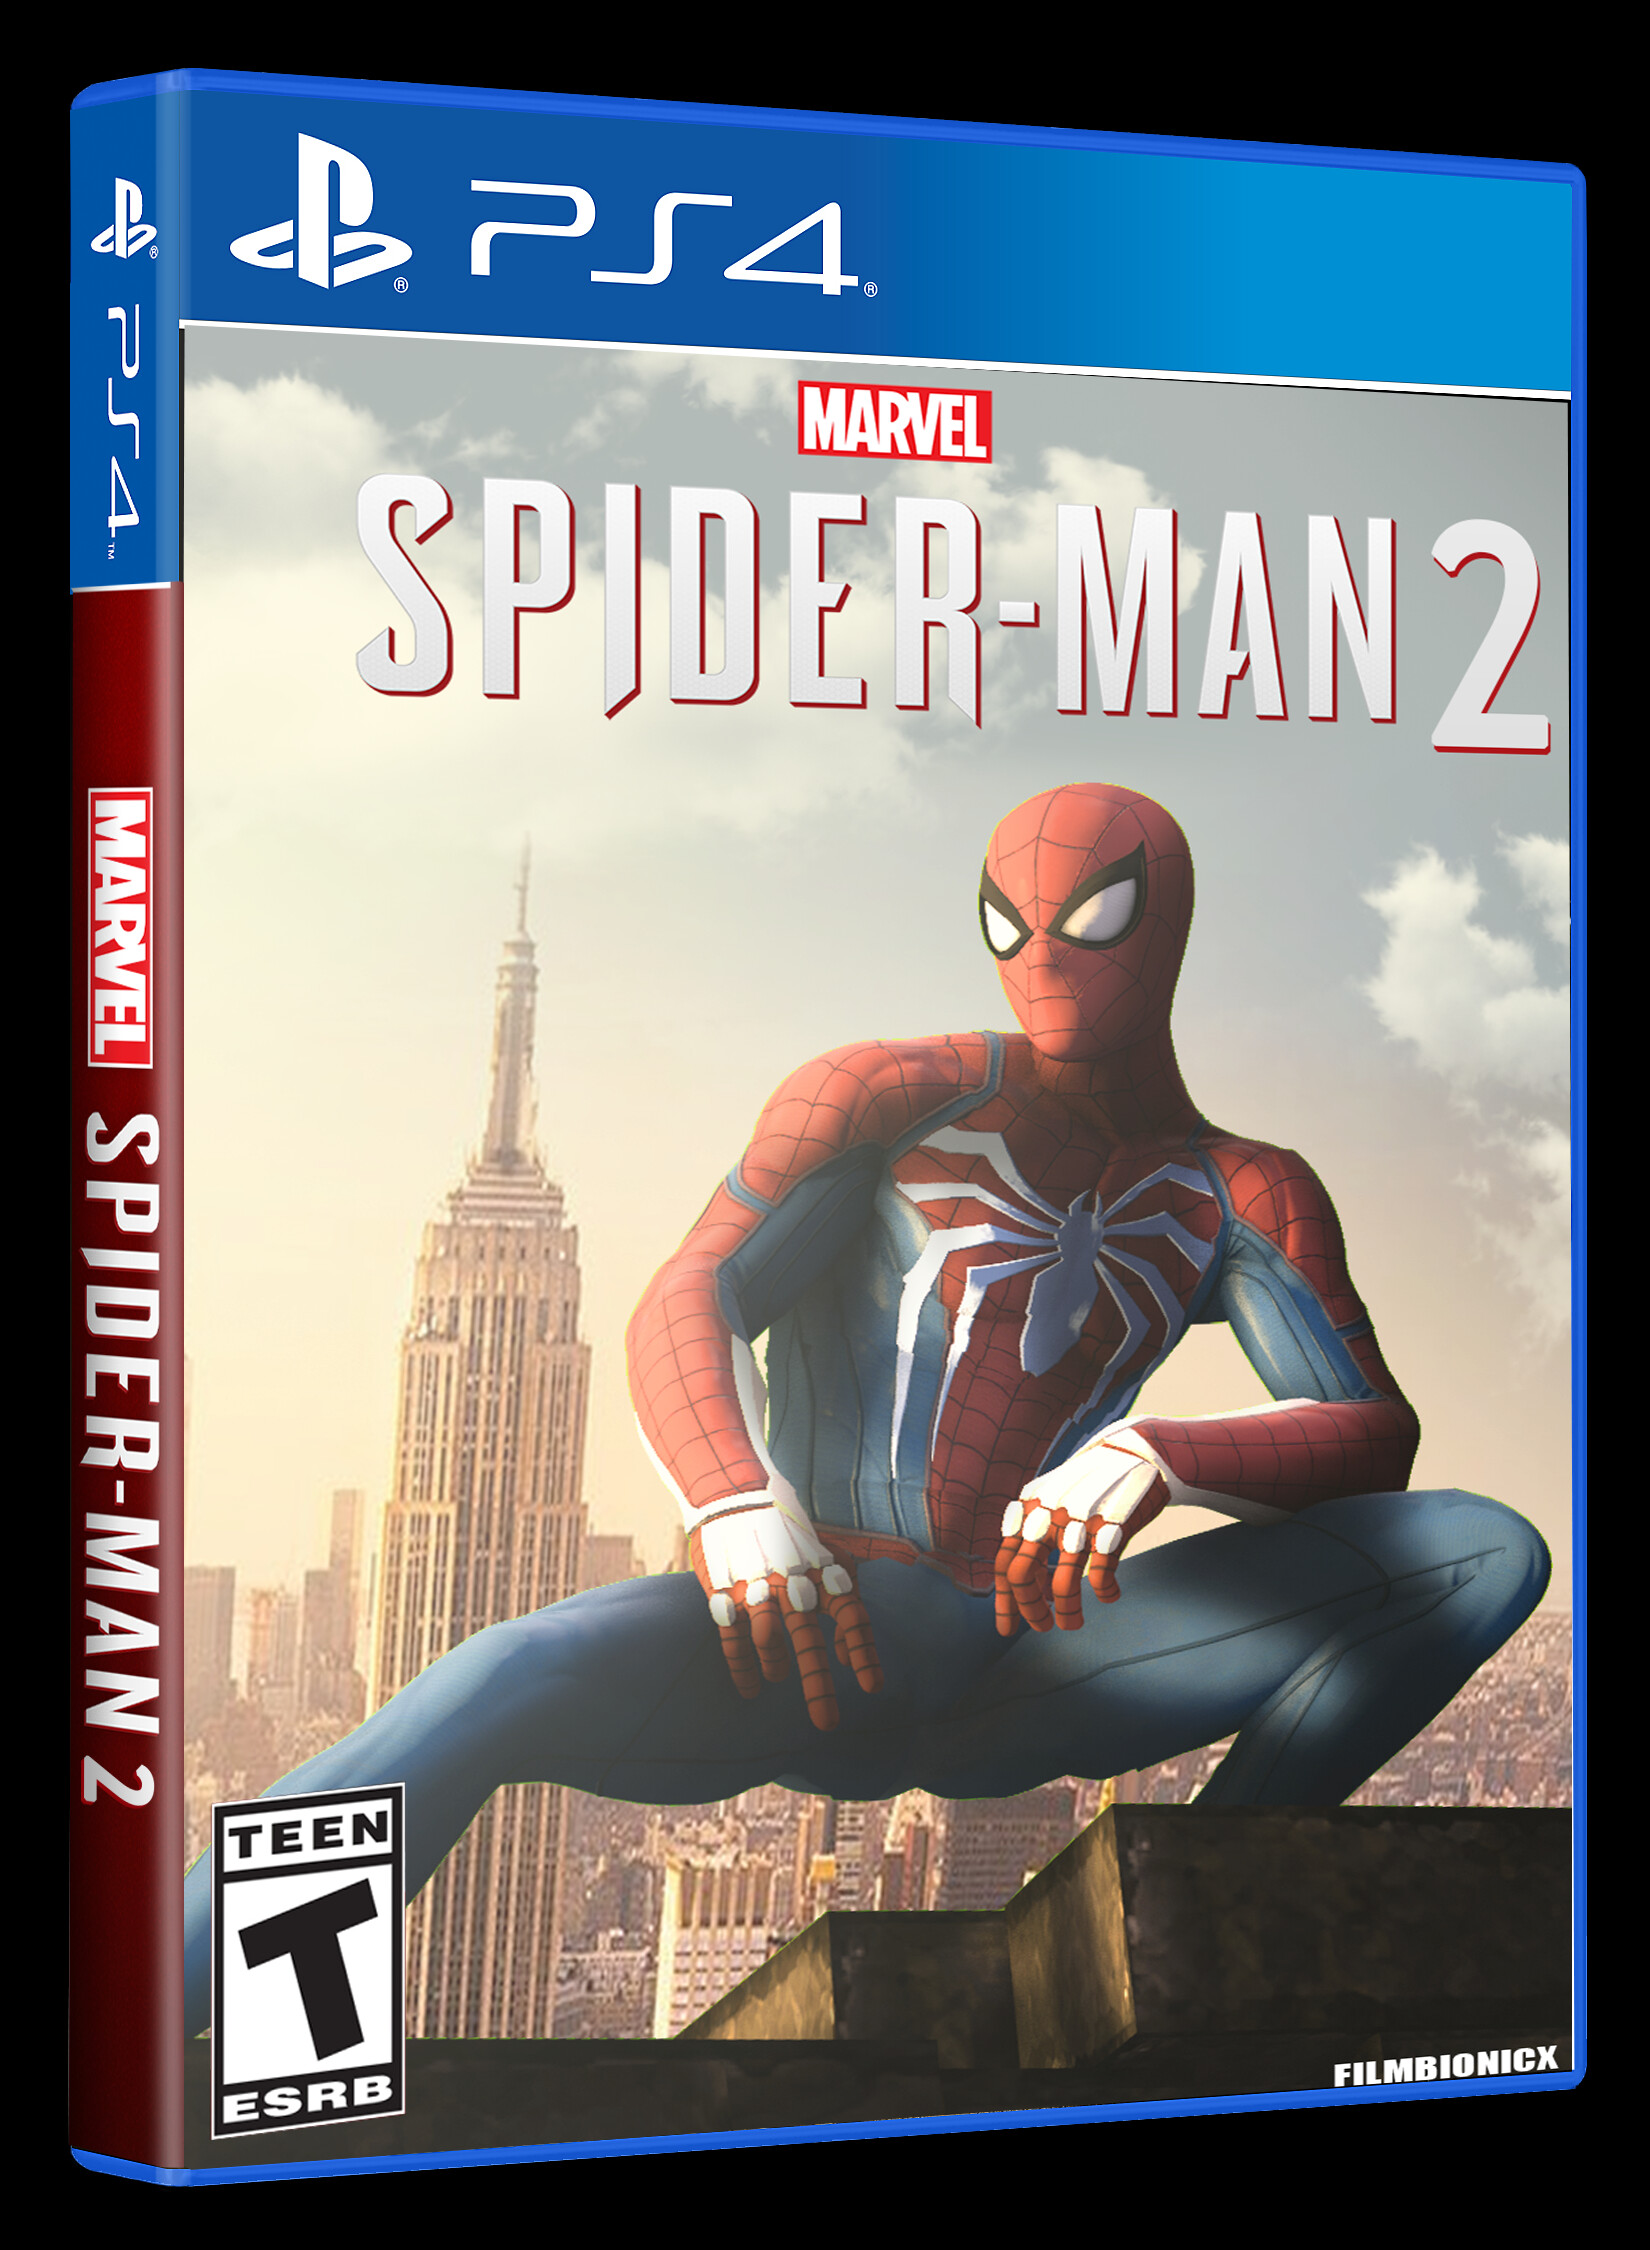 ArtStation SPIDERMAN 2 PS4 COVER BOX GAME, FILM BIONICX